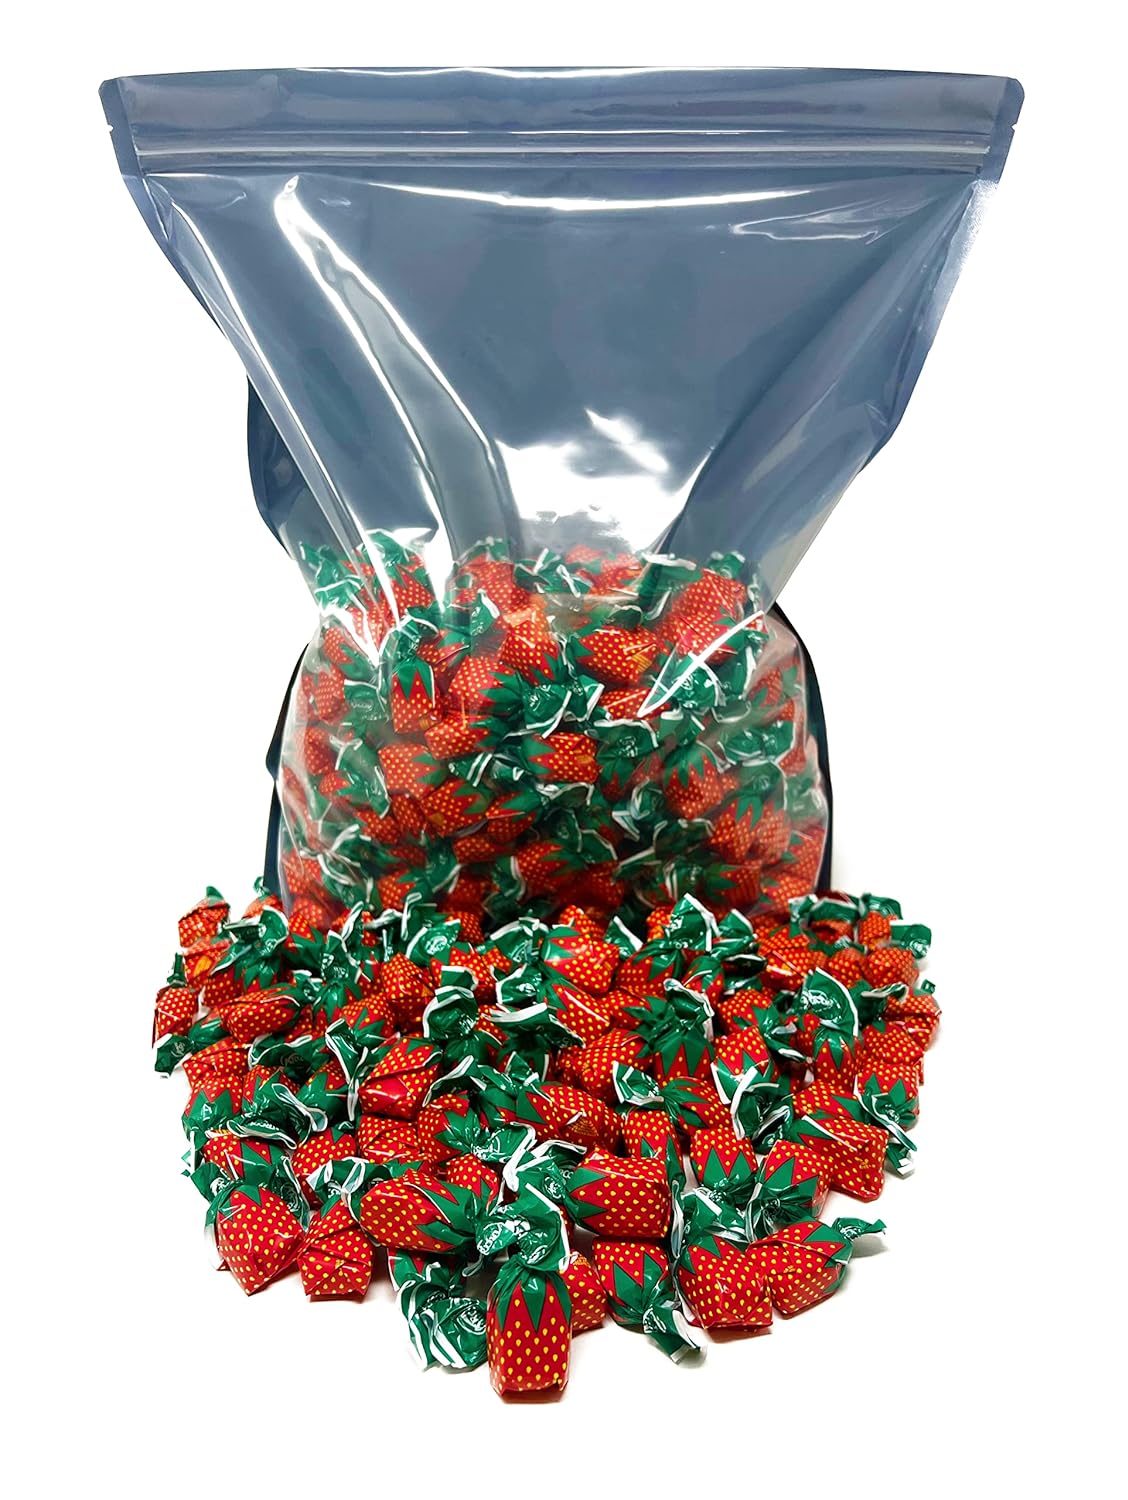 Arcor Strawberry Filled Hard Candy - 10 lbs - Classic Strawberry Flavored Filled With Chewy Strawberry Center Bulk Bag 160 oz.